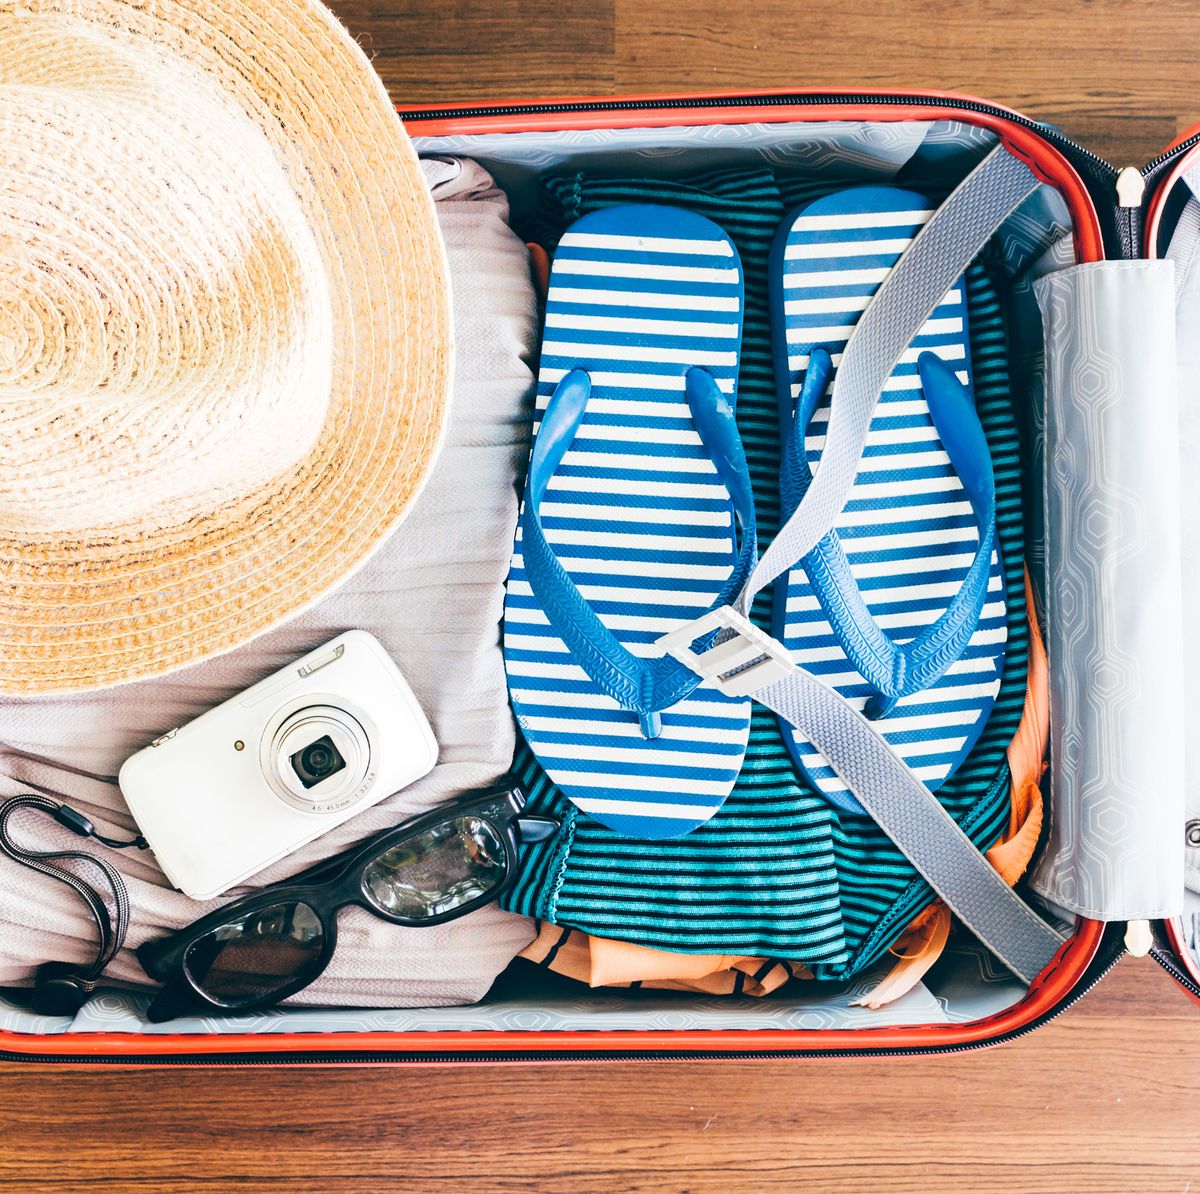 Summer Adventures Begin: As travel season kicks off, ensure your